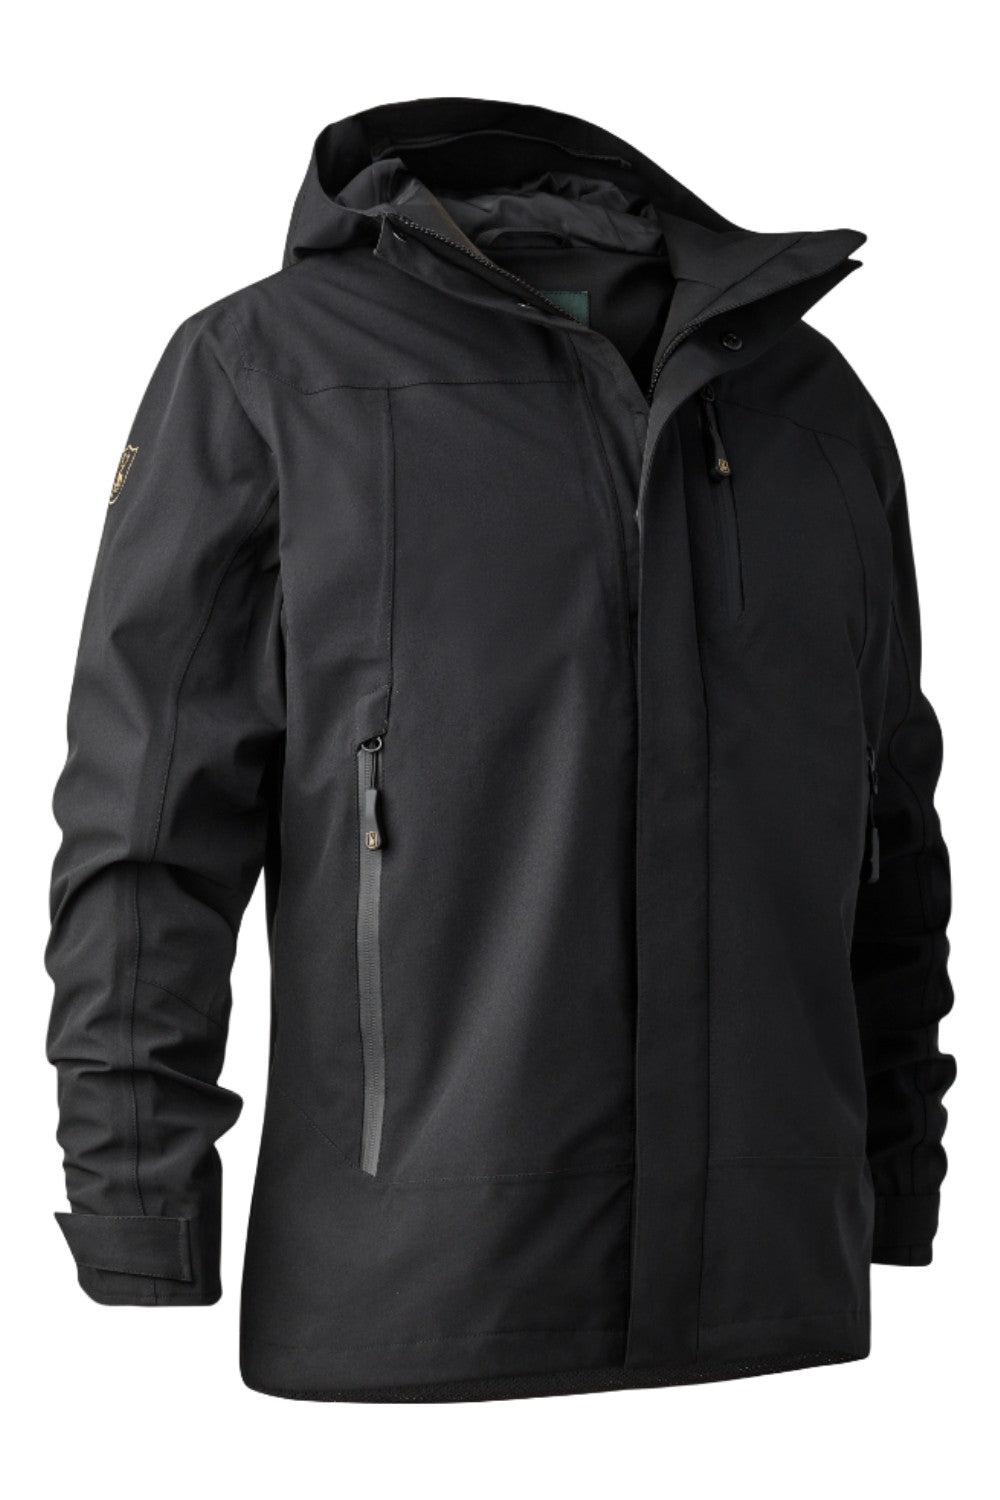 Deerhunter Sarek Shell Jacket With Hood In Black 